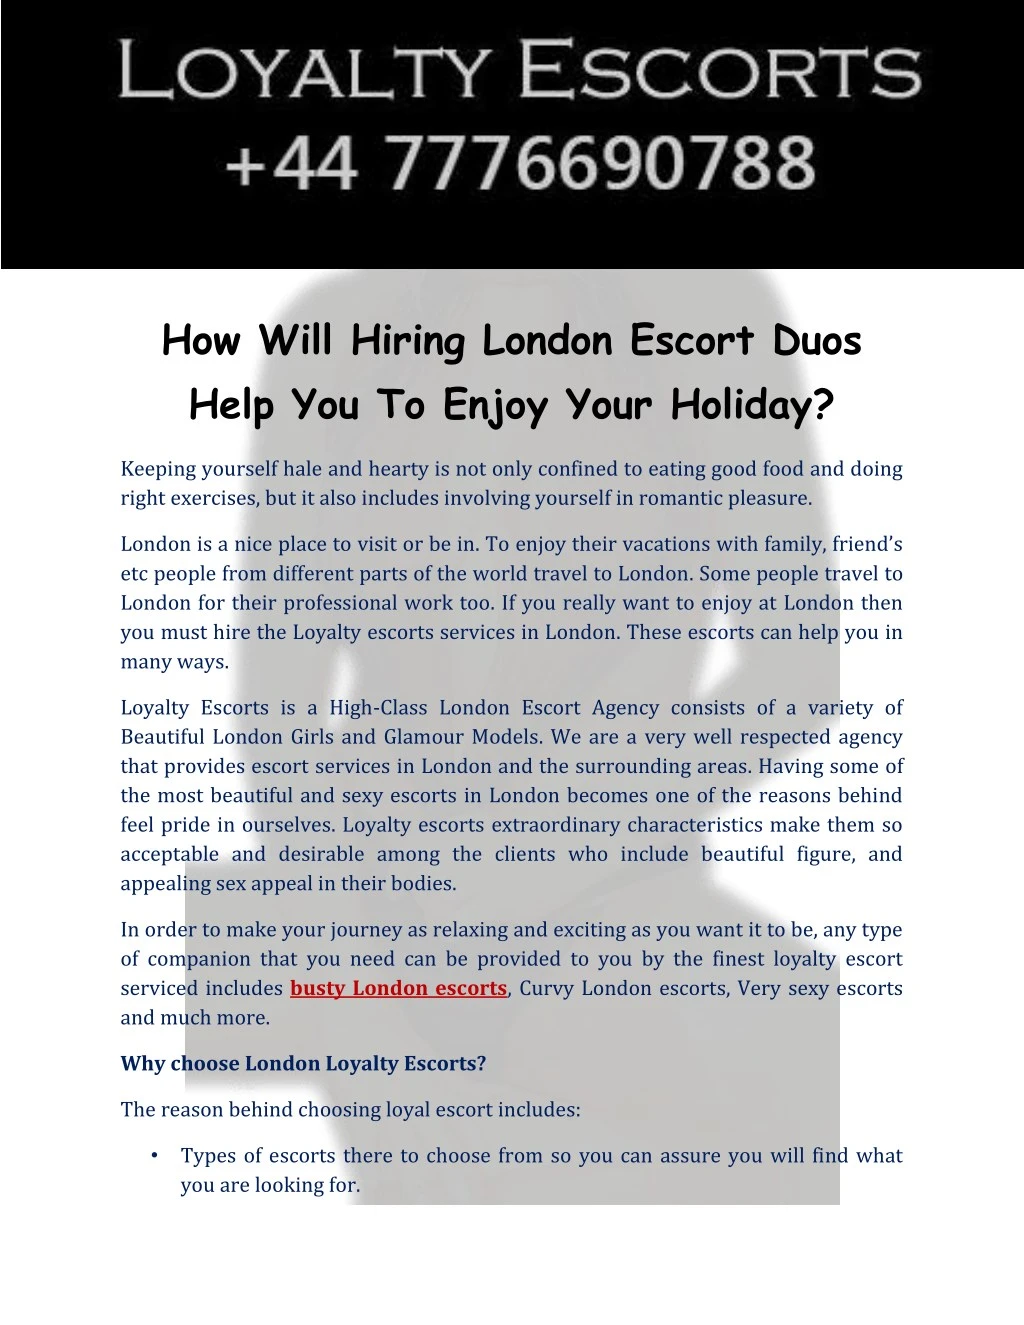 how will hiring london escort duos help